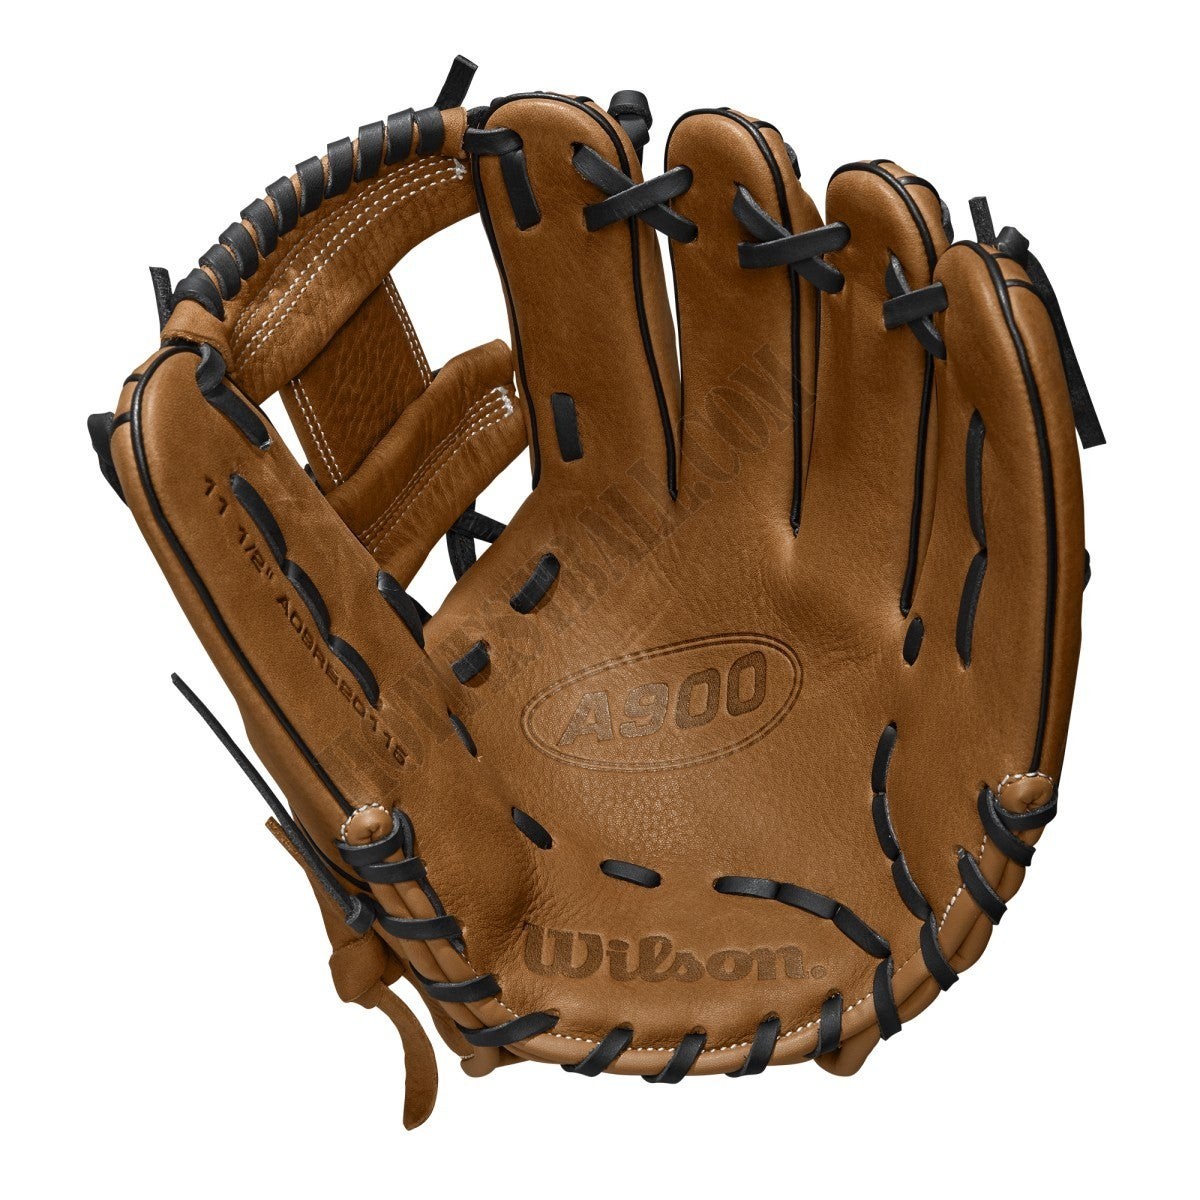 2020 A900 11.5" Baseball Glove ● Wilson Promotions - -2